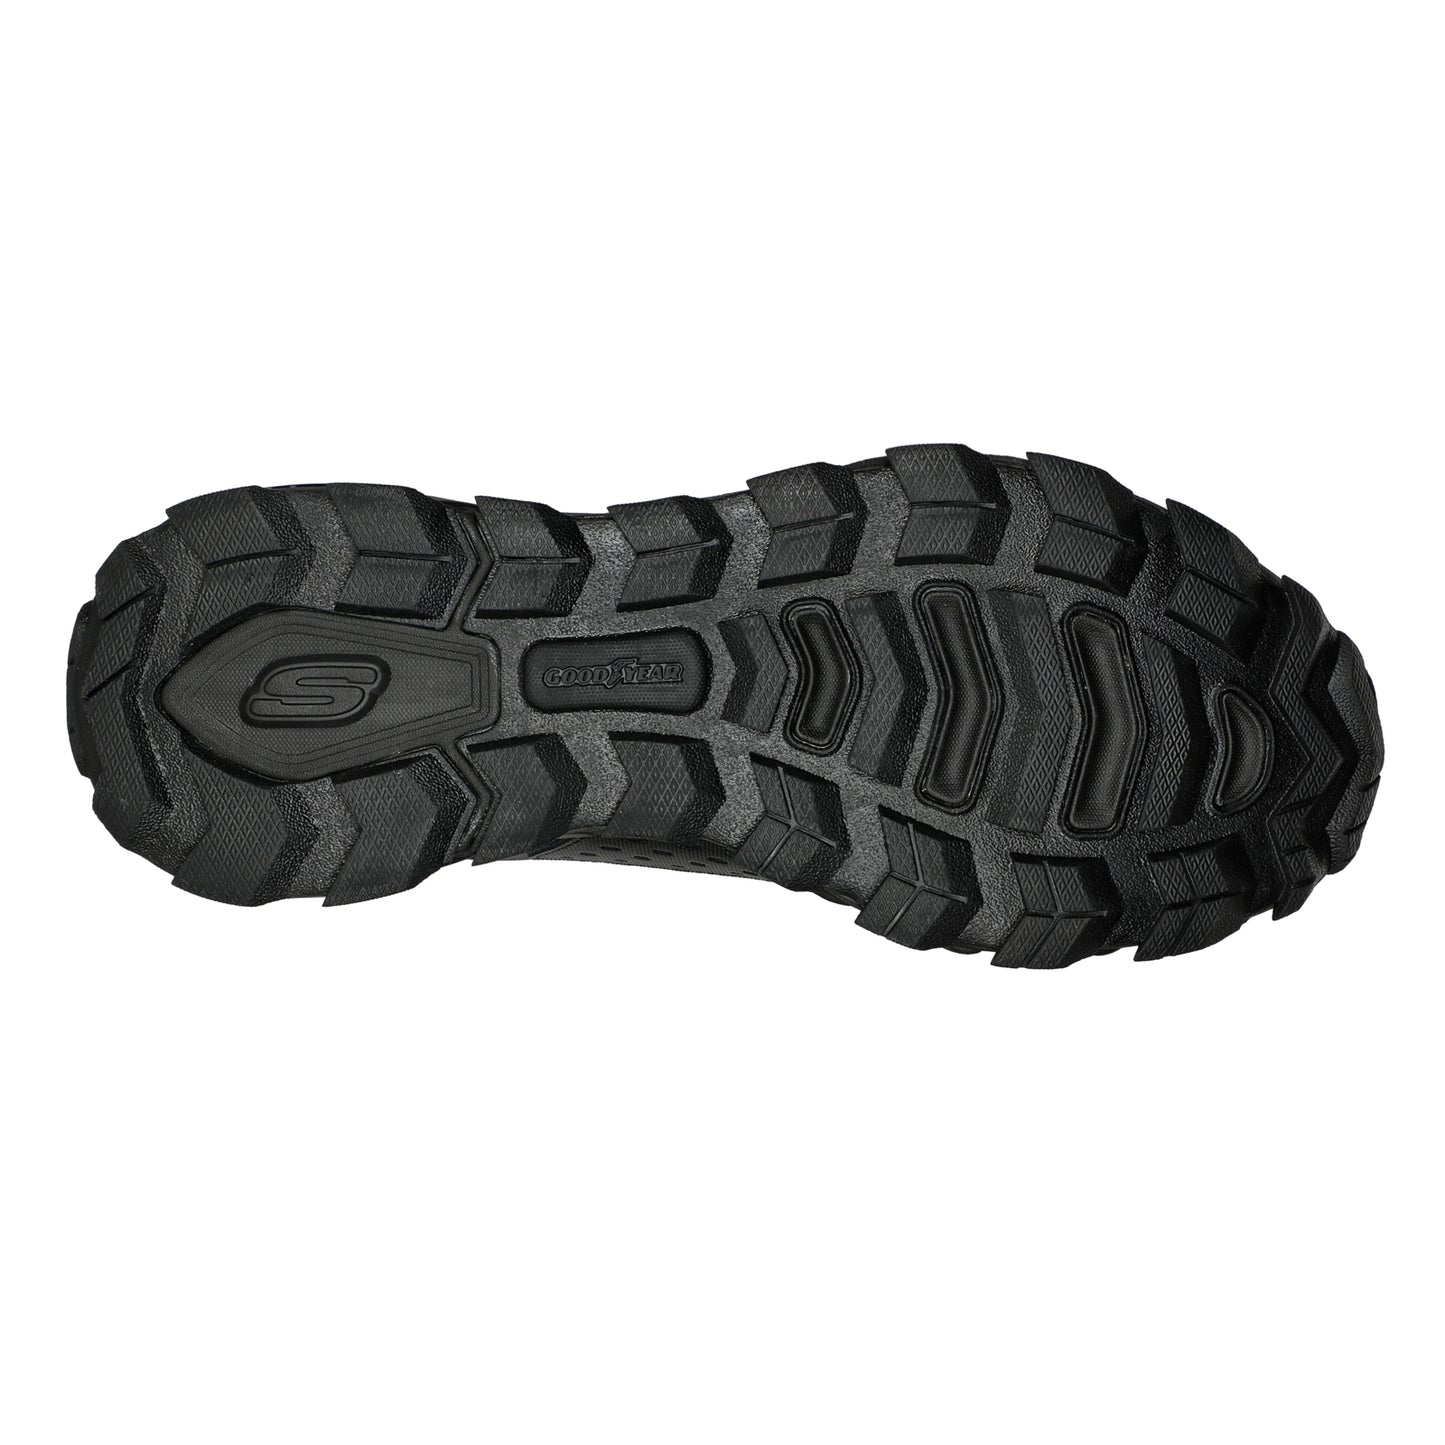 Peltz Shoes  Men's Skechers Max Protect Task Force Hiking Shoe Black/Black 237308-BBK